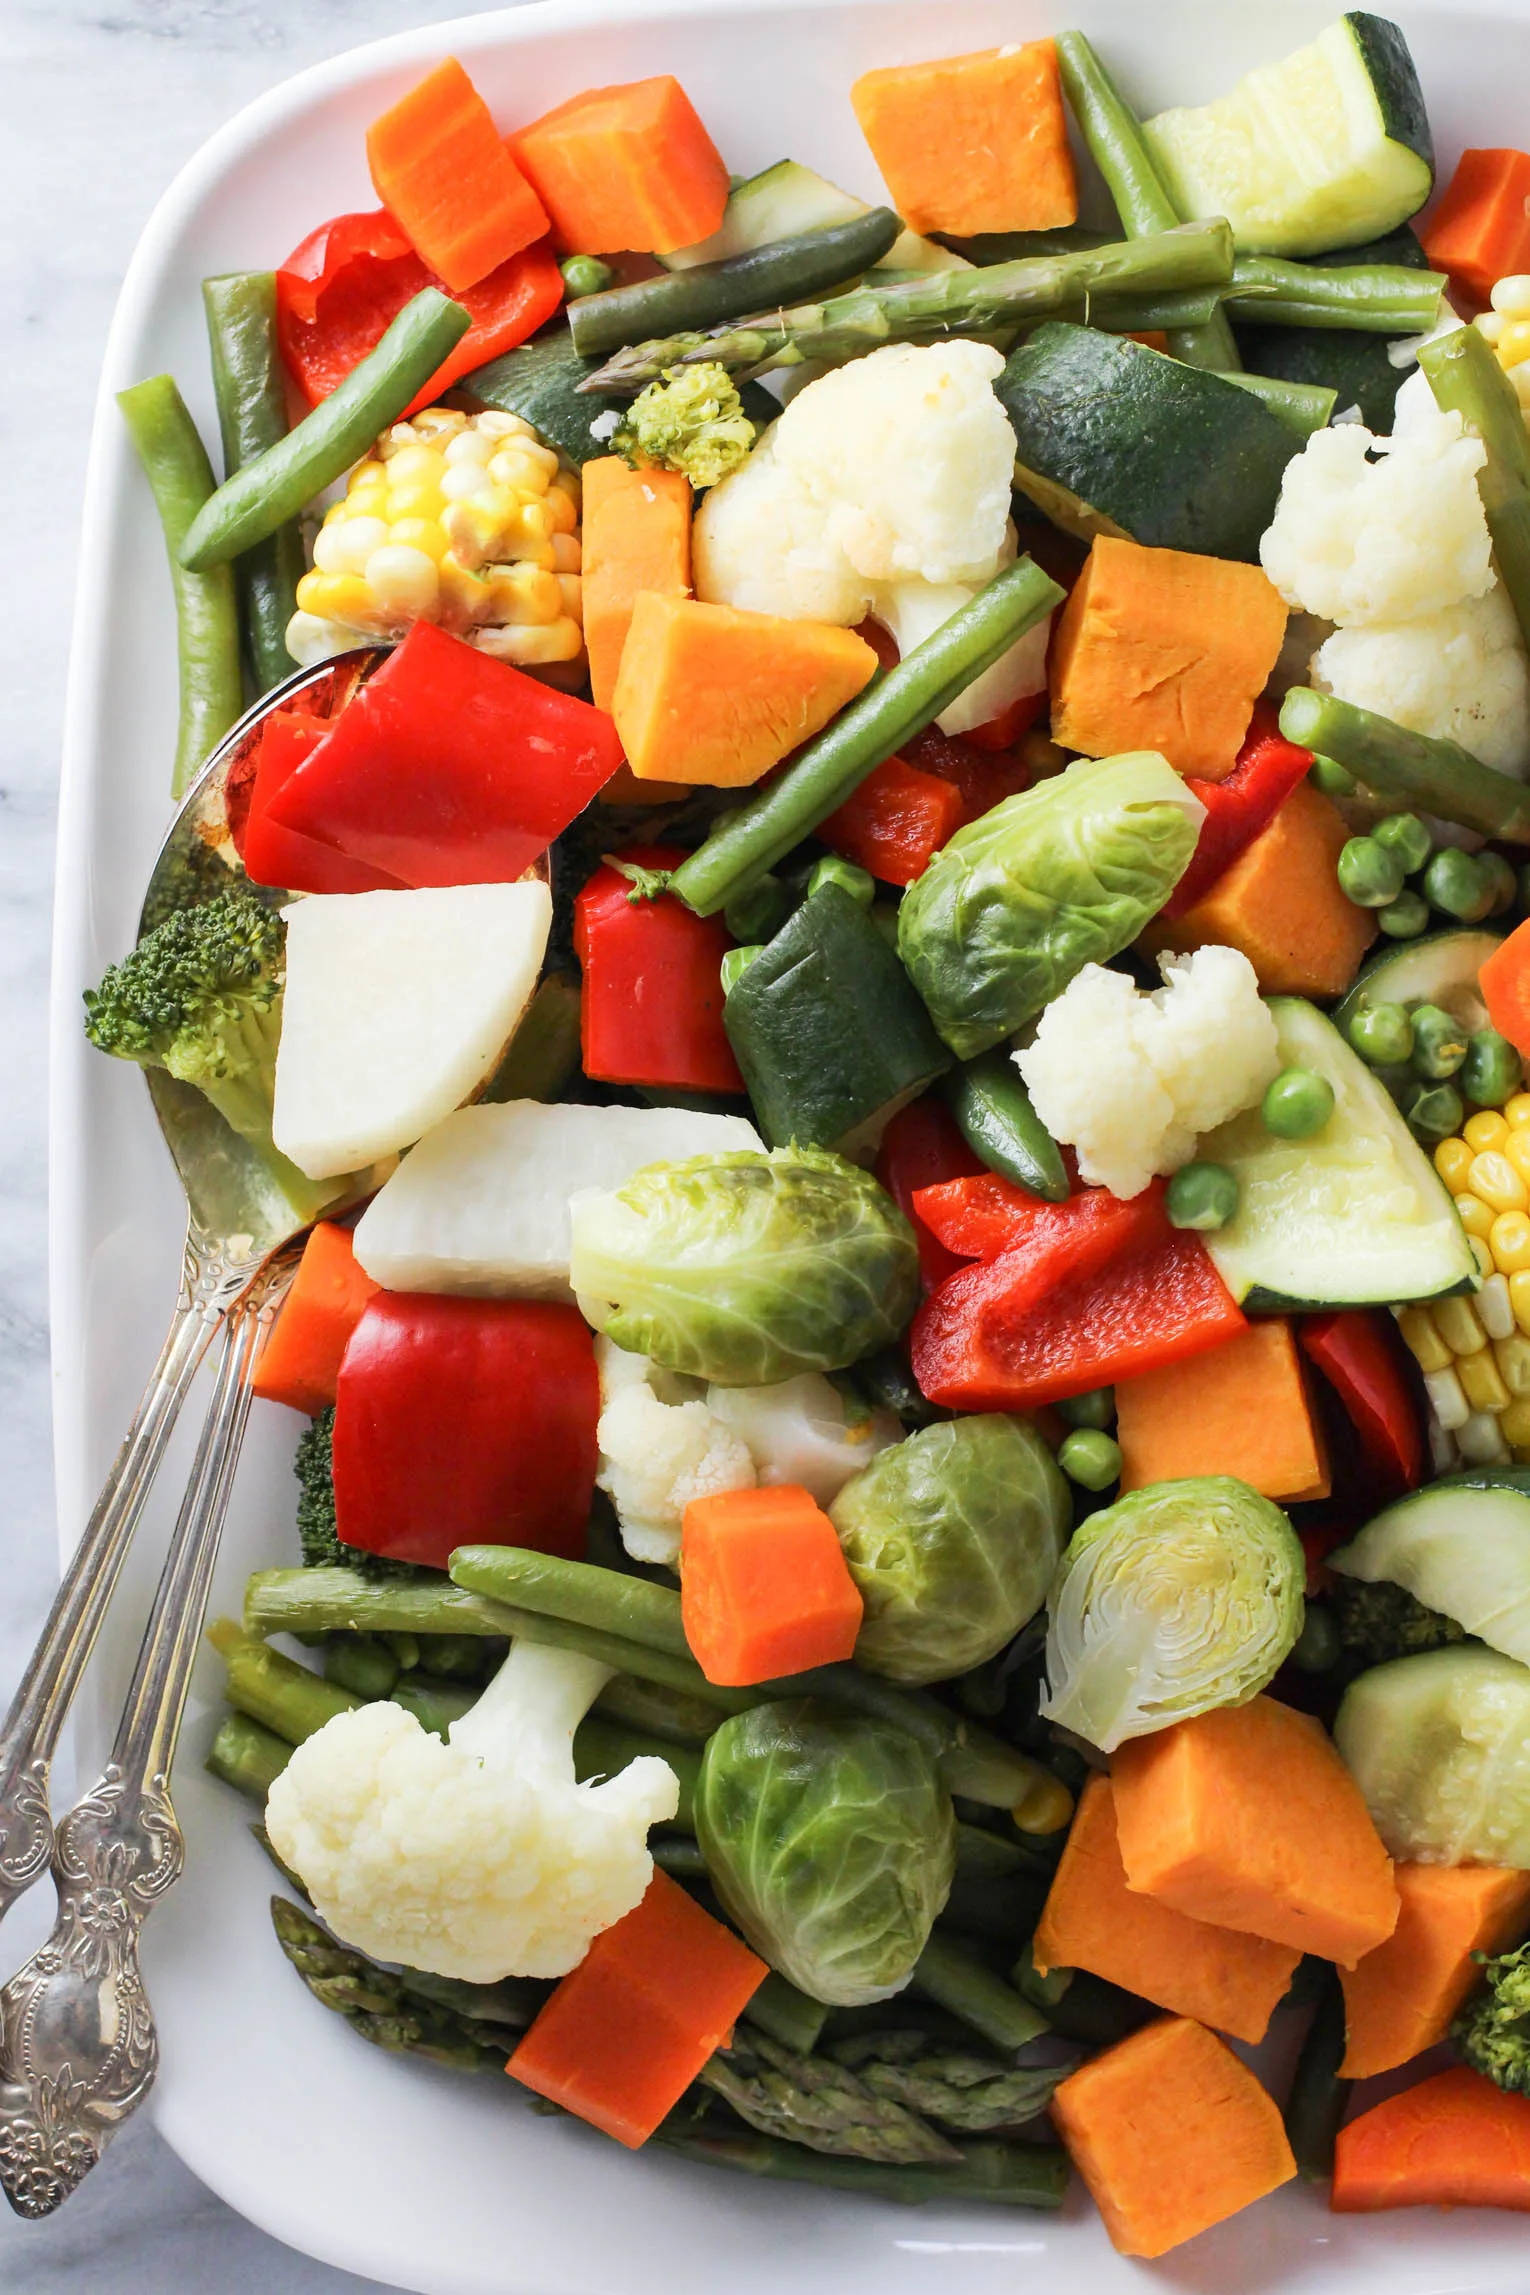 Instant Pot steamed vegetables on a white platter.